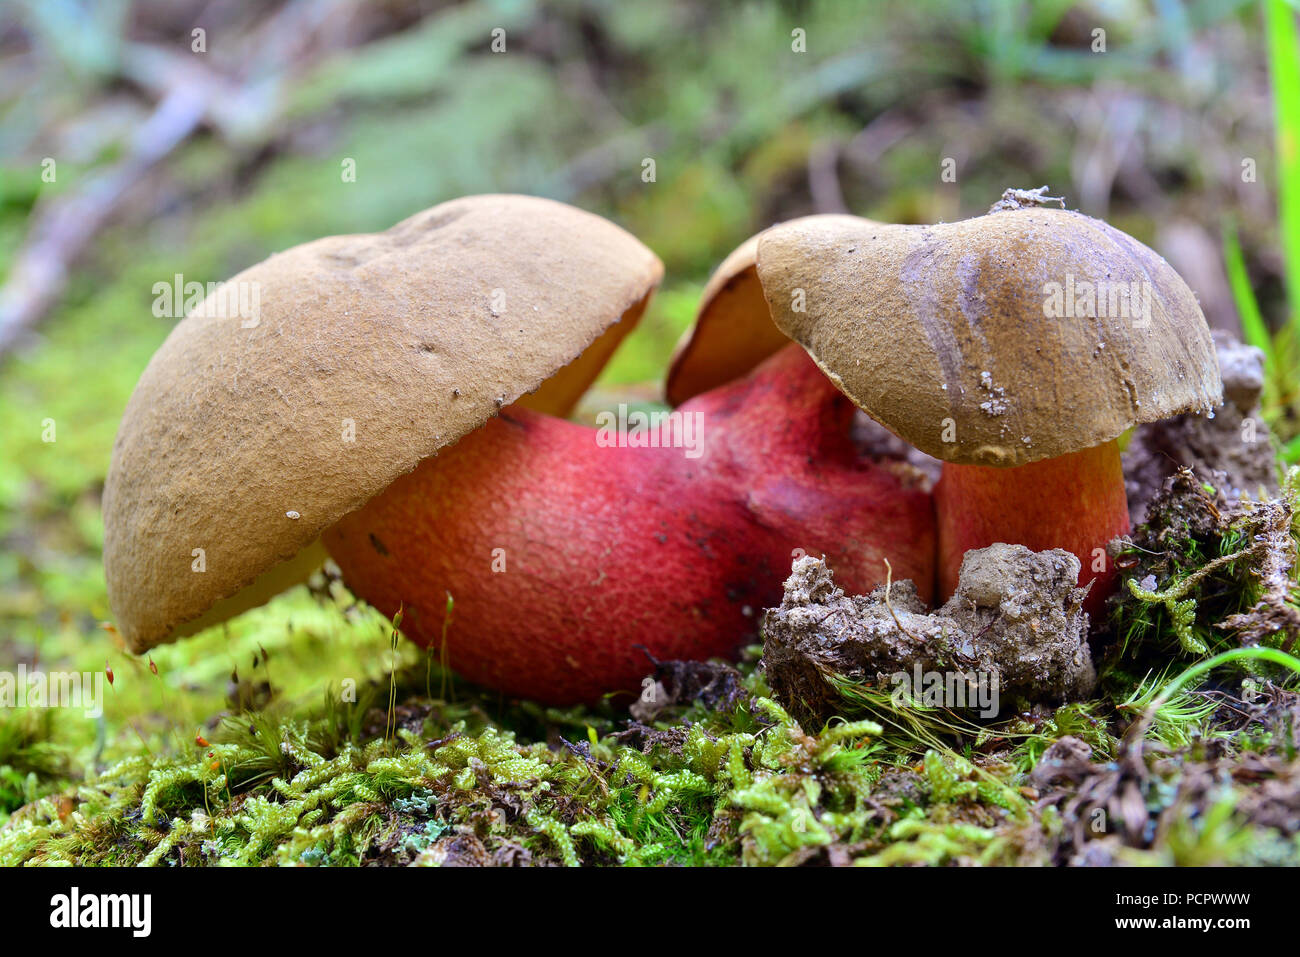 boletus calopus mushrooms on the ground Stock Photo